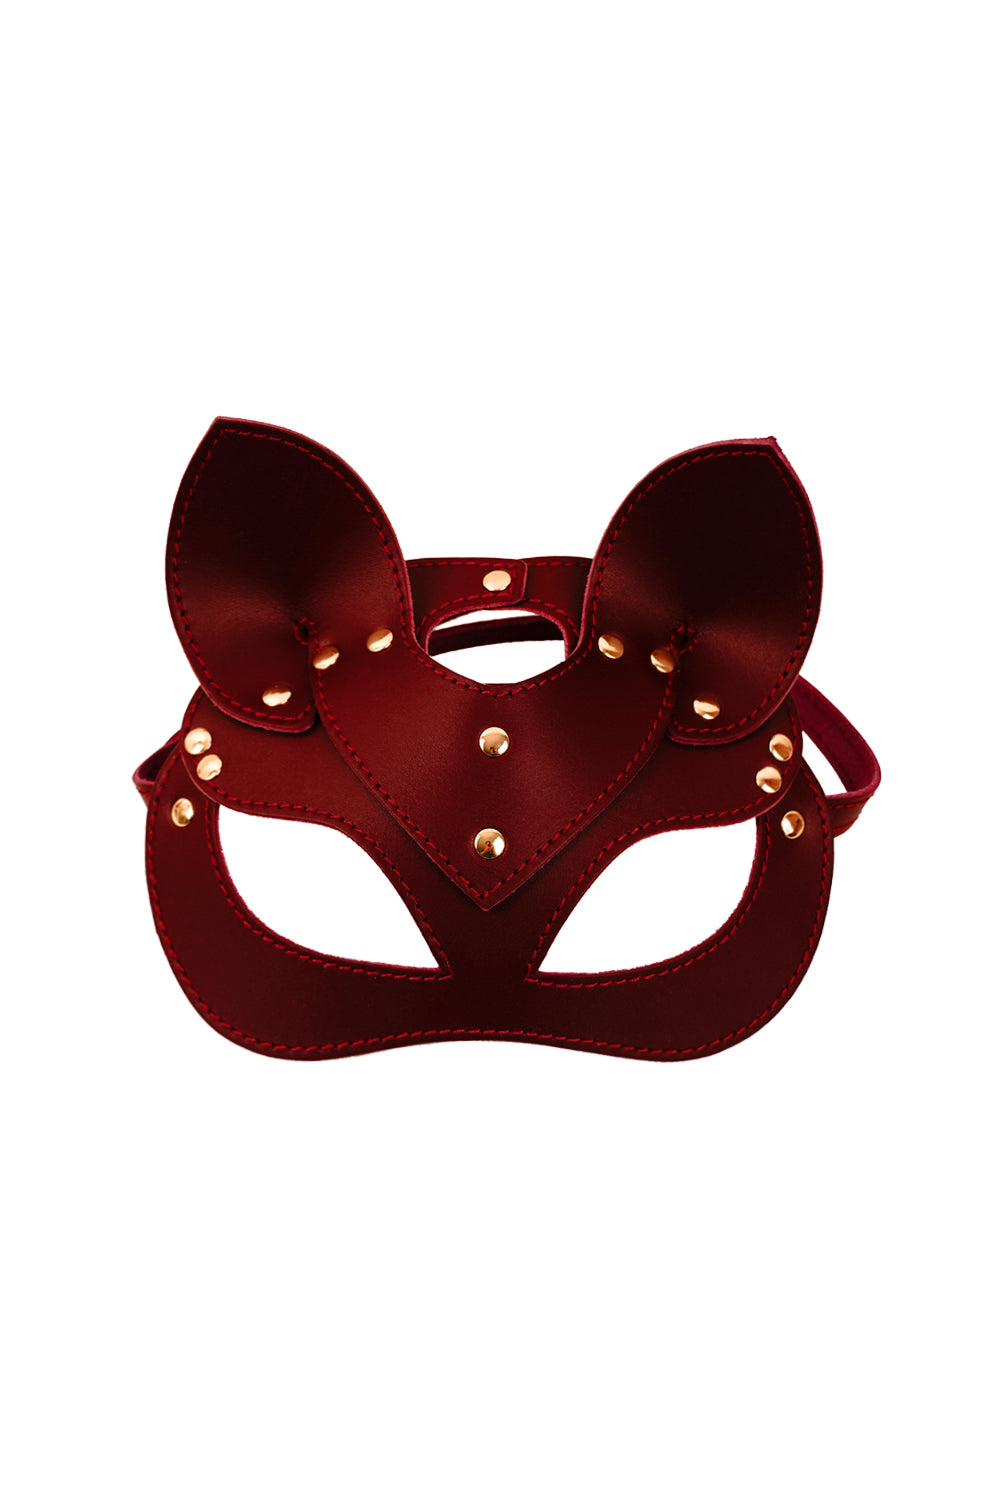 Leather сat mask, kitty fetish mask. Burgundy